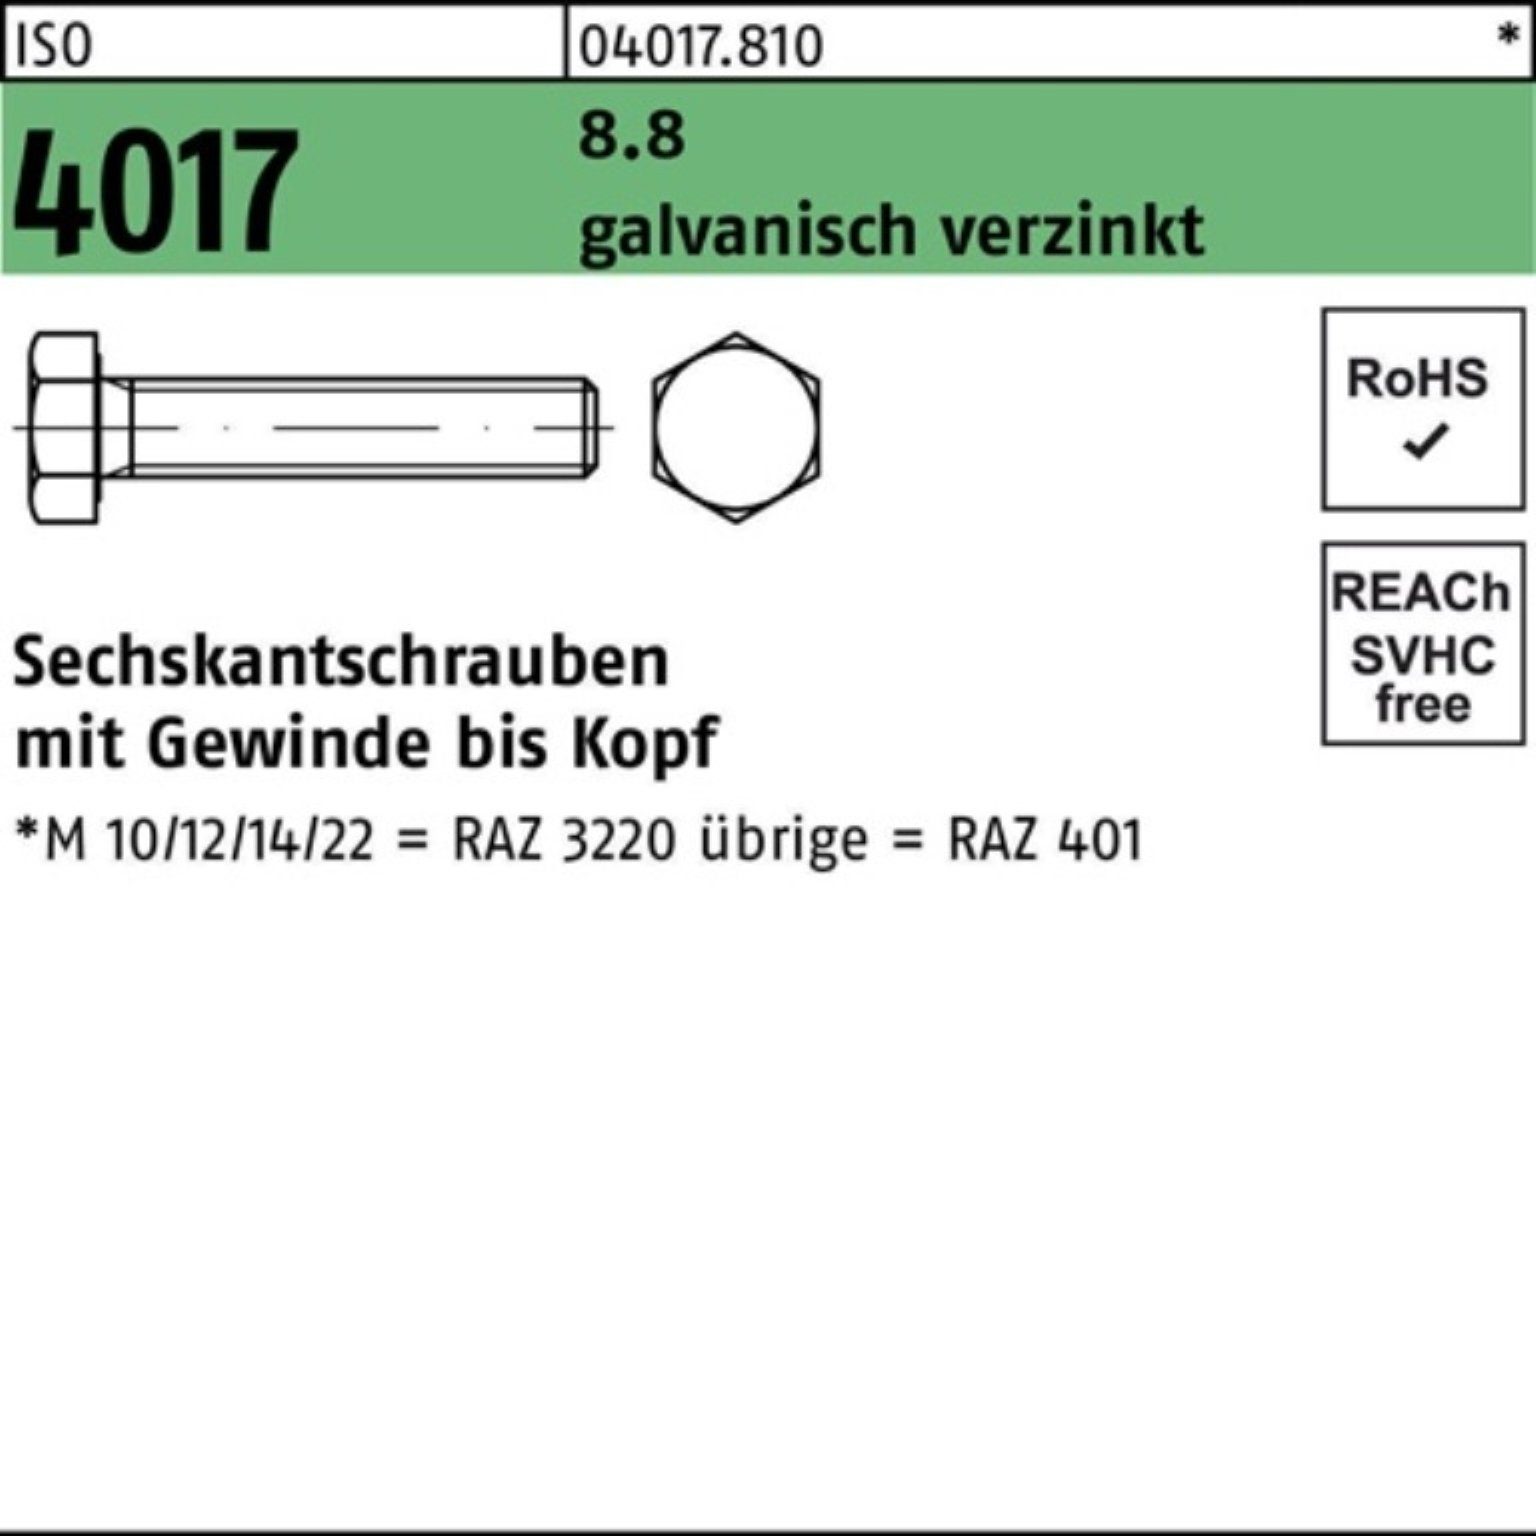 Bufab Sechskantschraube 150 4017 1 8.8 M42x 100er Pack Sechskantschraube VG St galv.verz. ISO